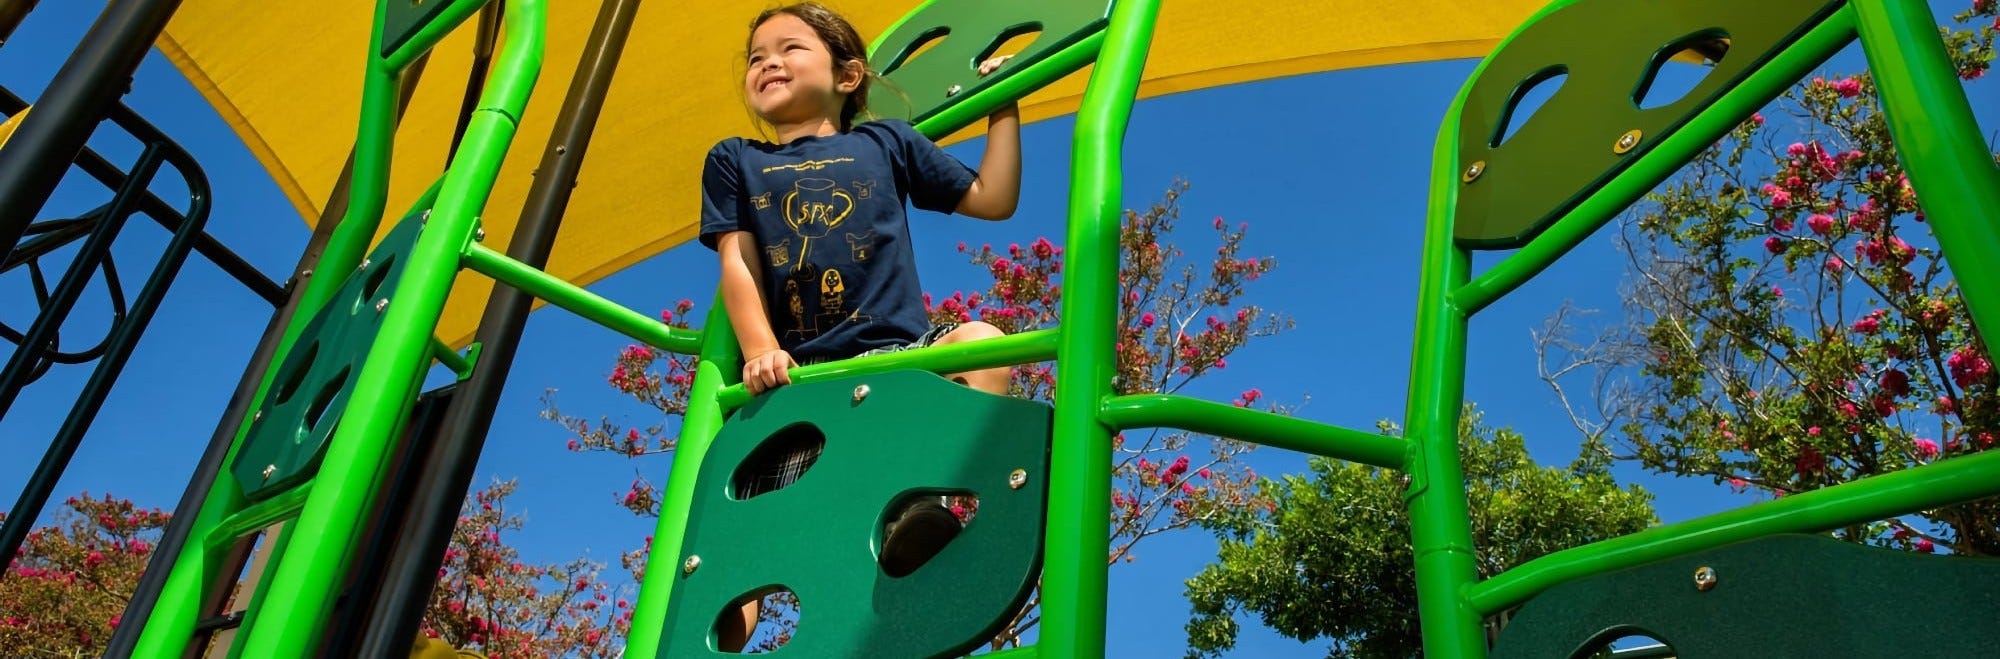 Five Ways to Make School Playground Equipment Part of Student Success